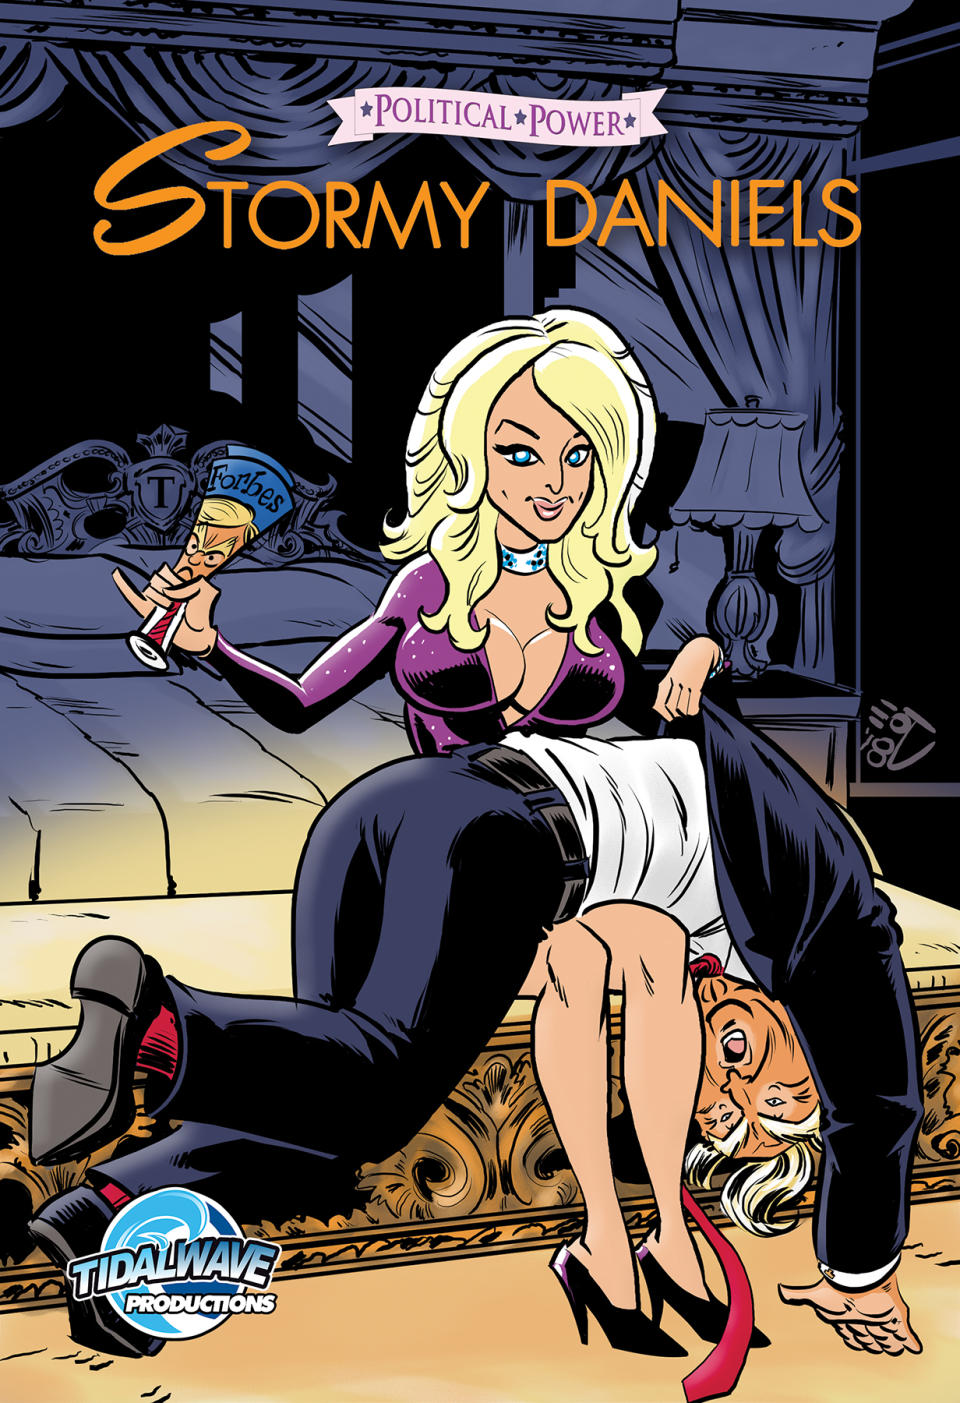 Spanking Animation - New comic shows Stormy Daniels spanking President Trump